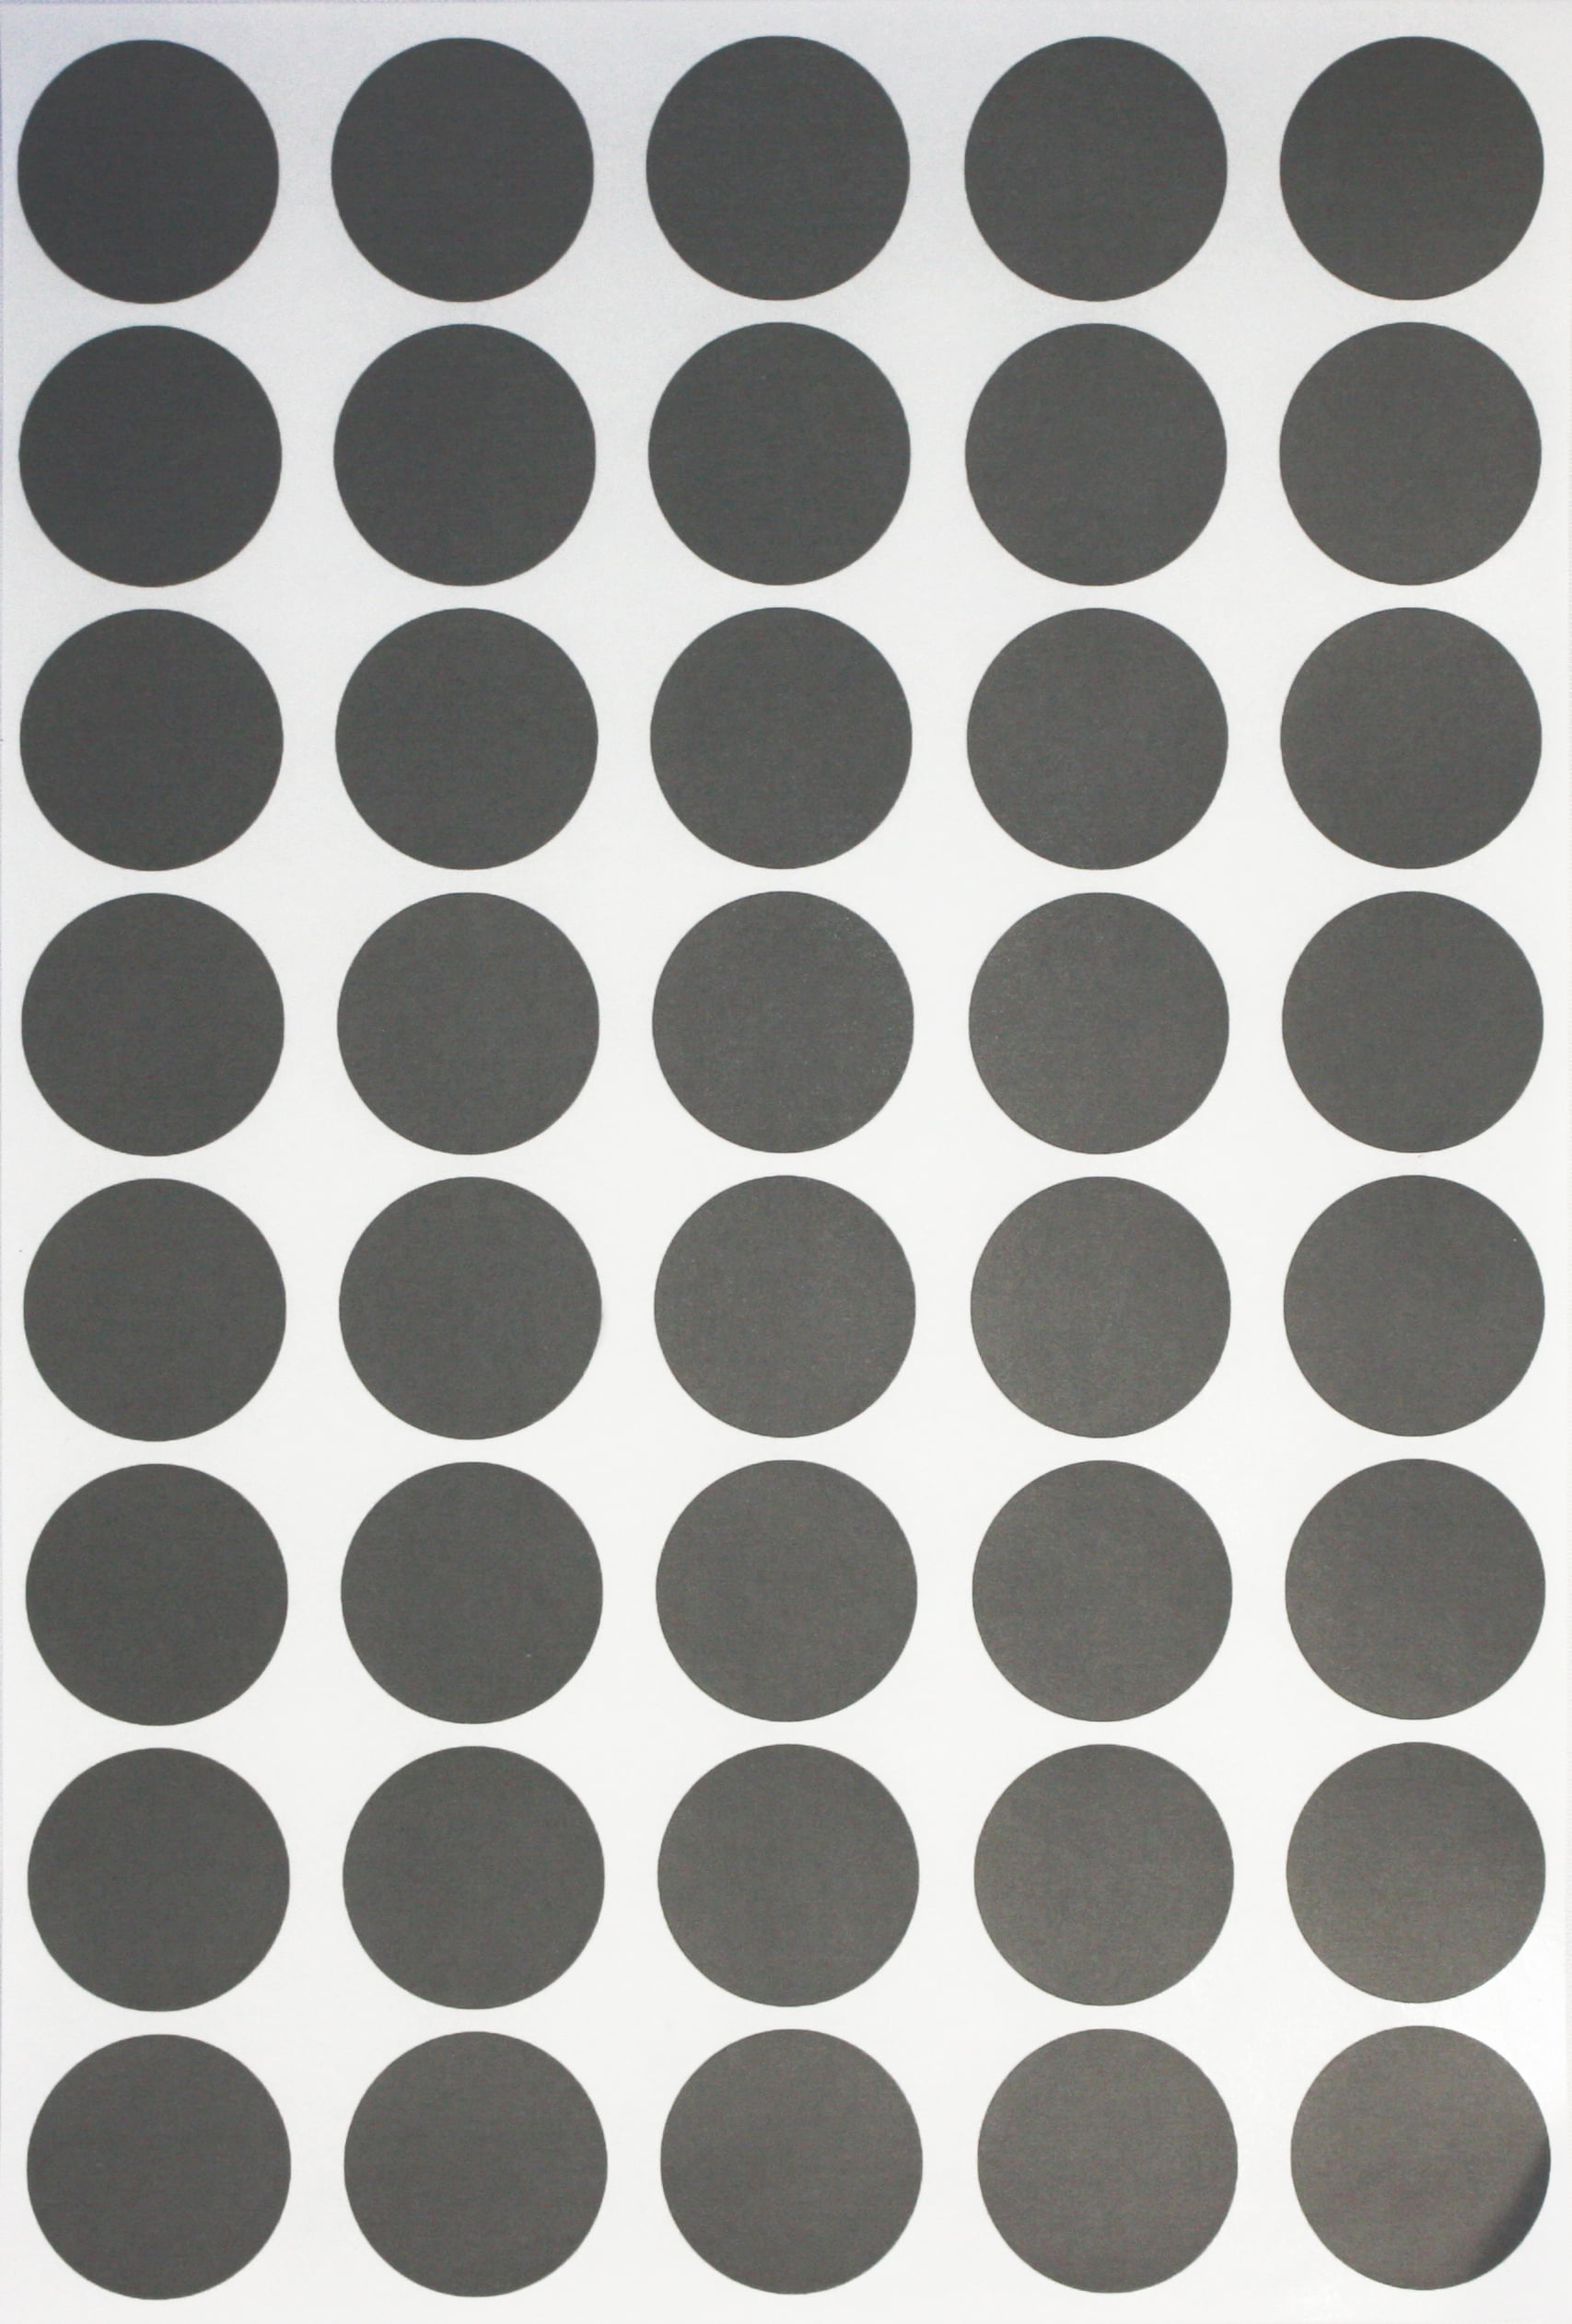 Tiny Black Color Dot Stickers 1/4 Round